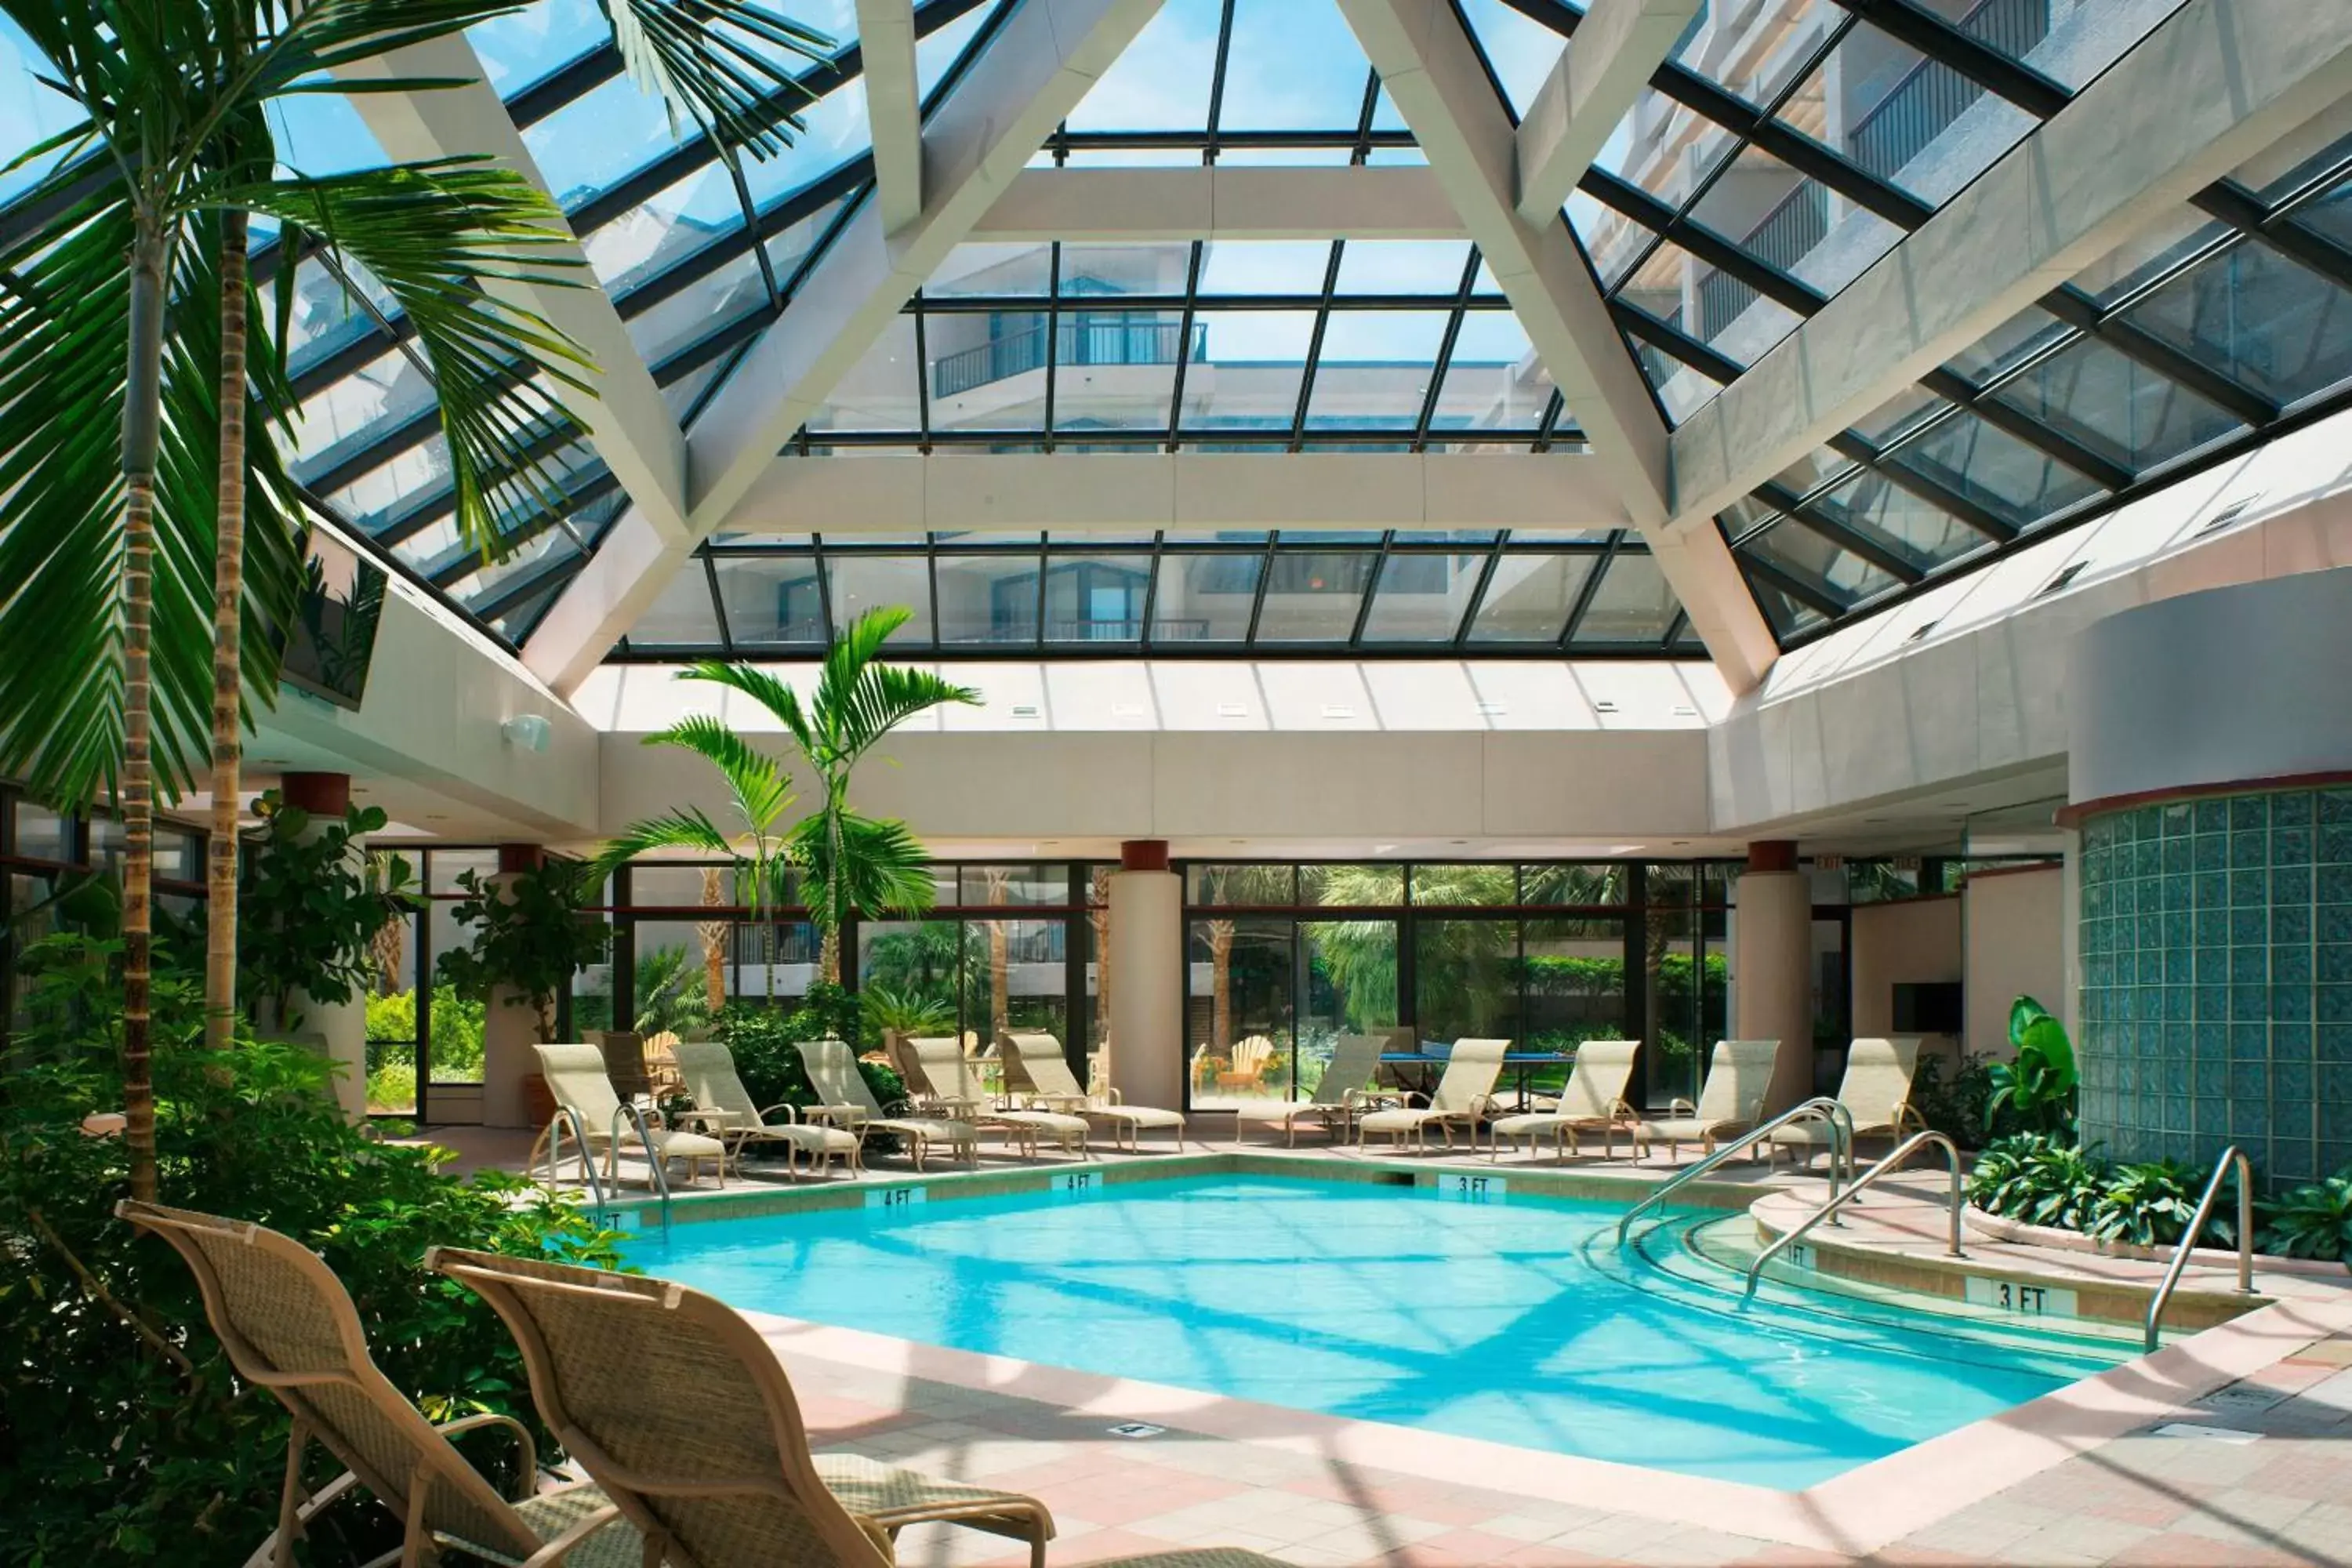 Swimming Pool in Marriott Hilton Head Resort & Spa